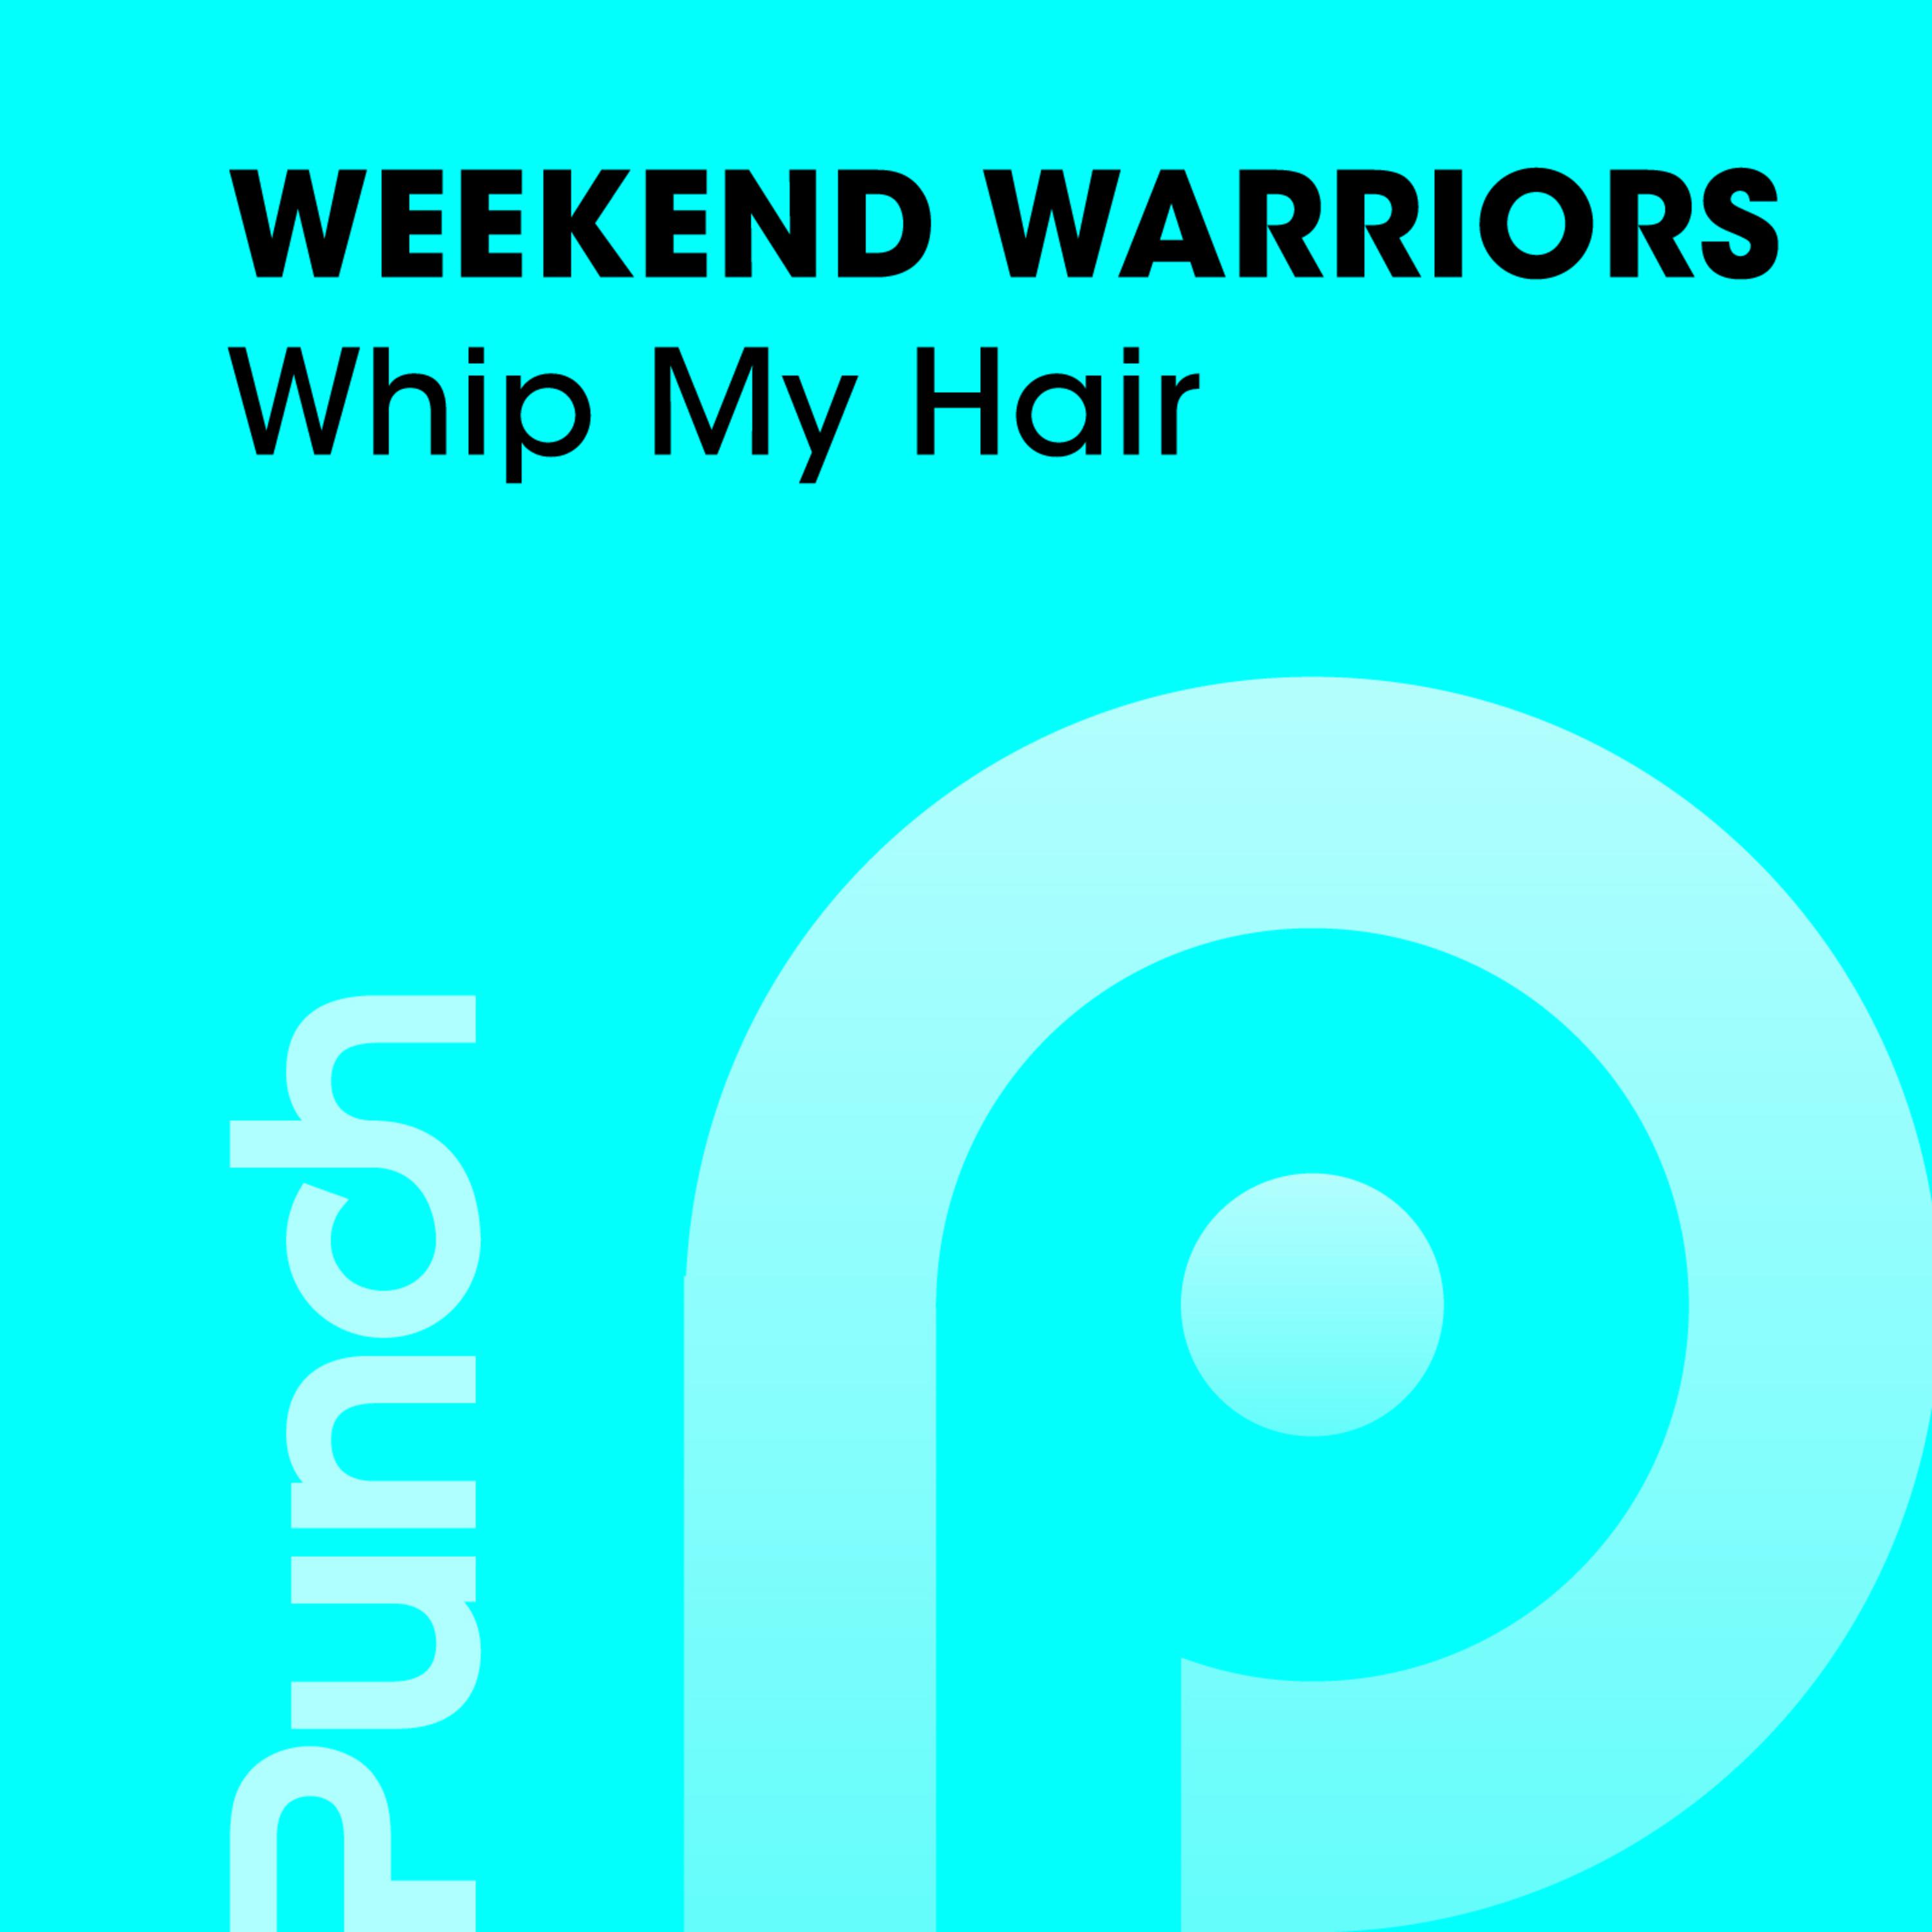 Whip My Hair